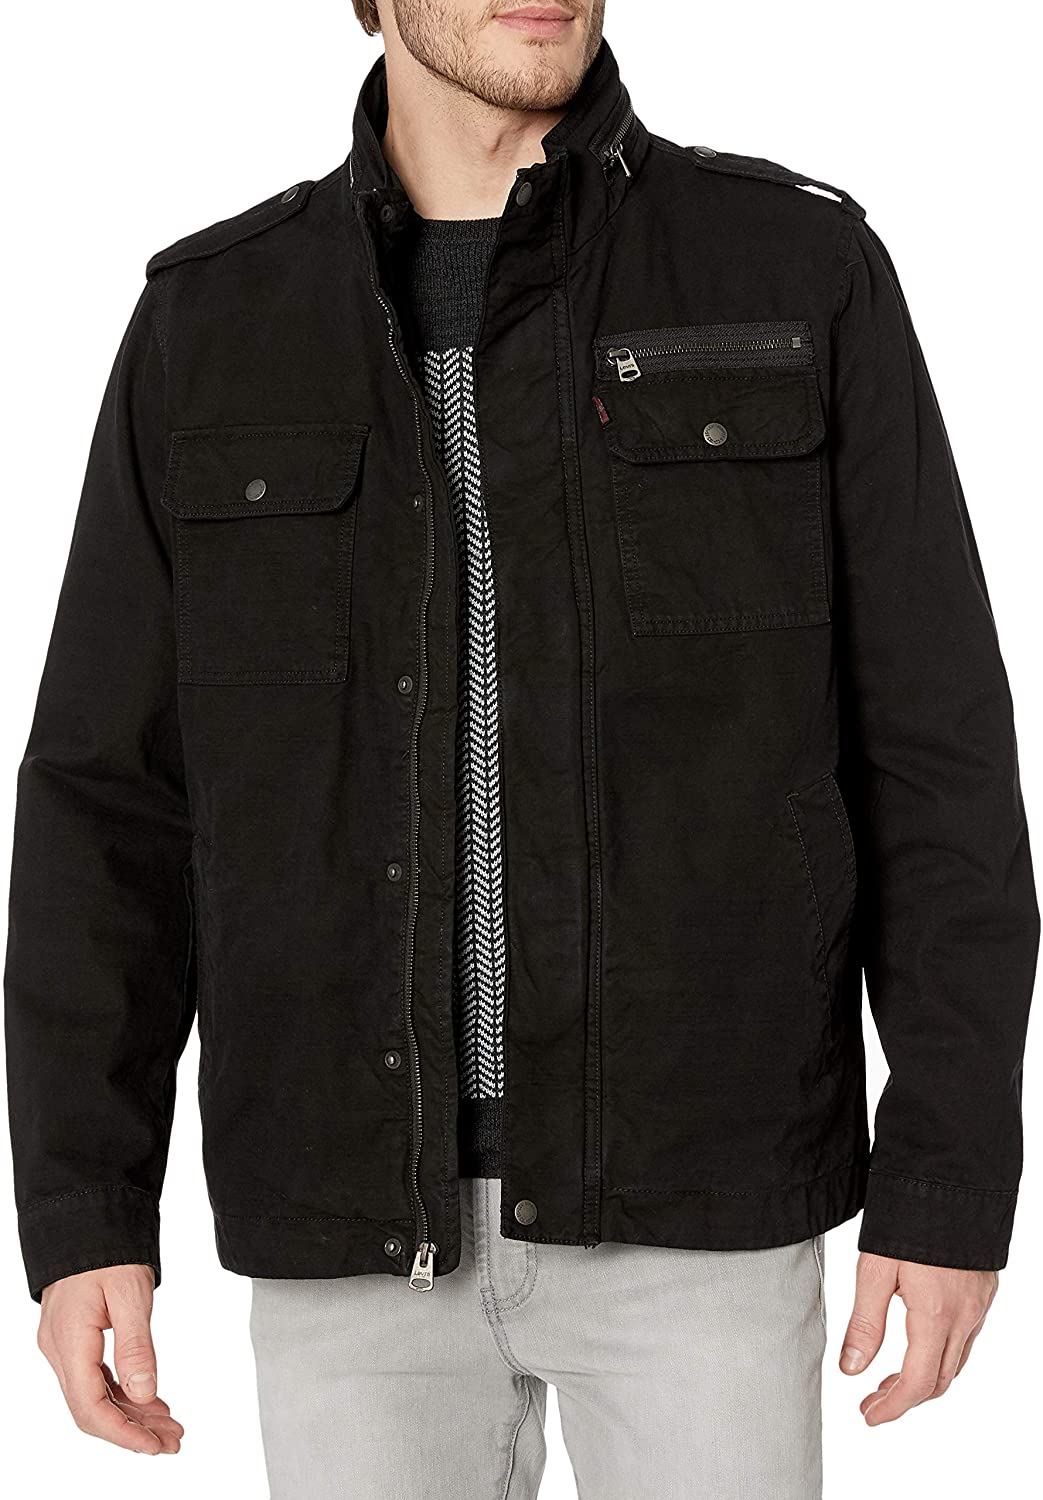 Levi's Men's Cotton Stand Collar Military Jacket | eBay